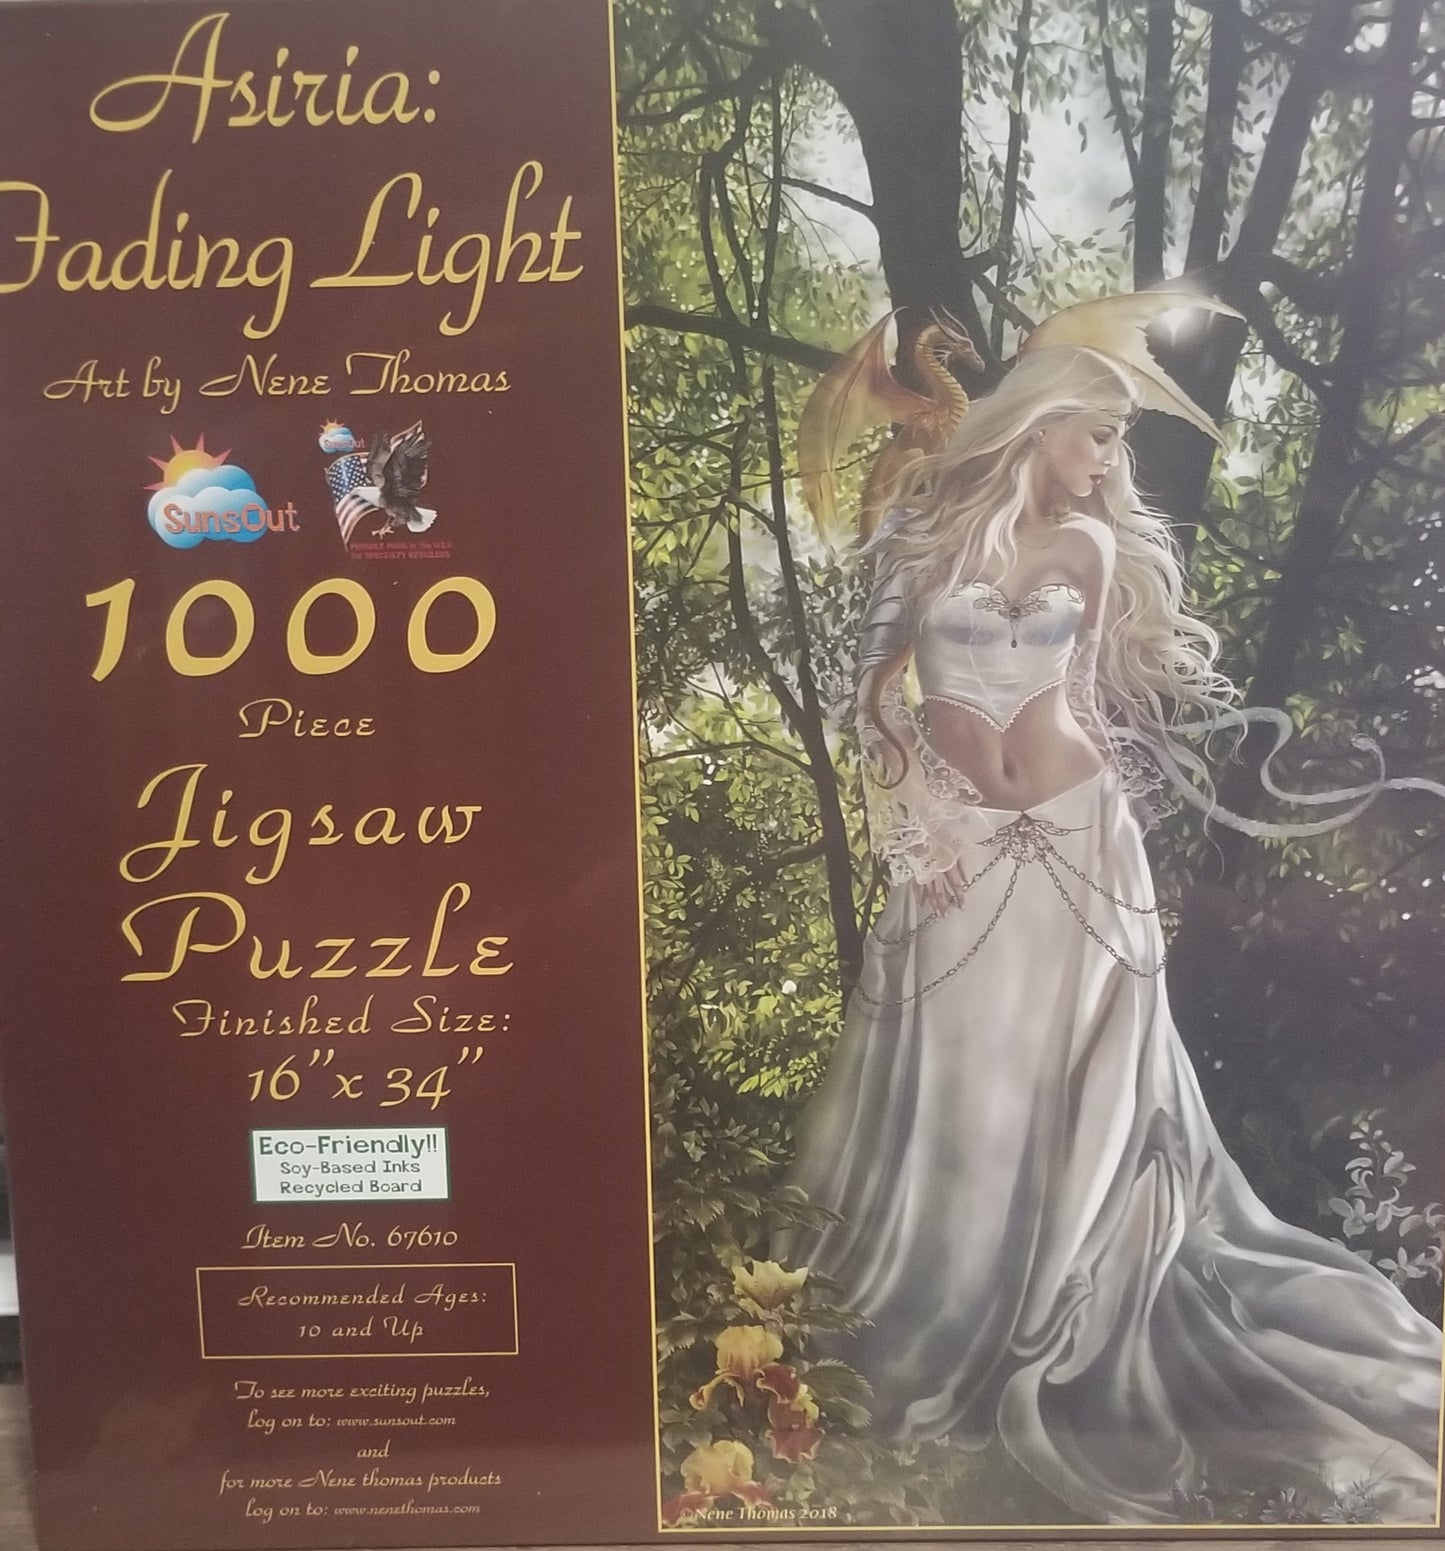 Asiria: Fading Light af Nene Thomas, 1000 brikker puslespil